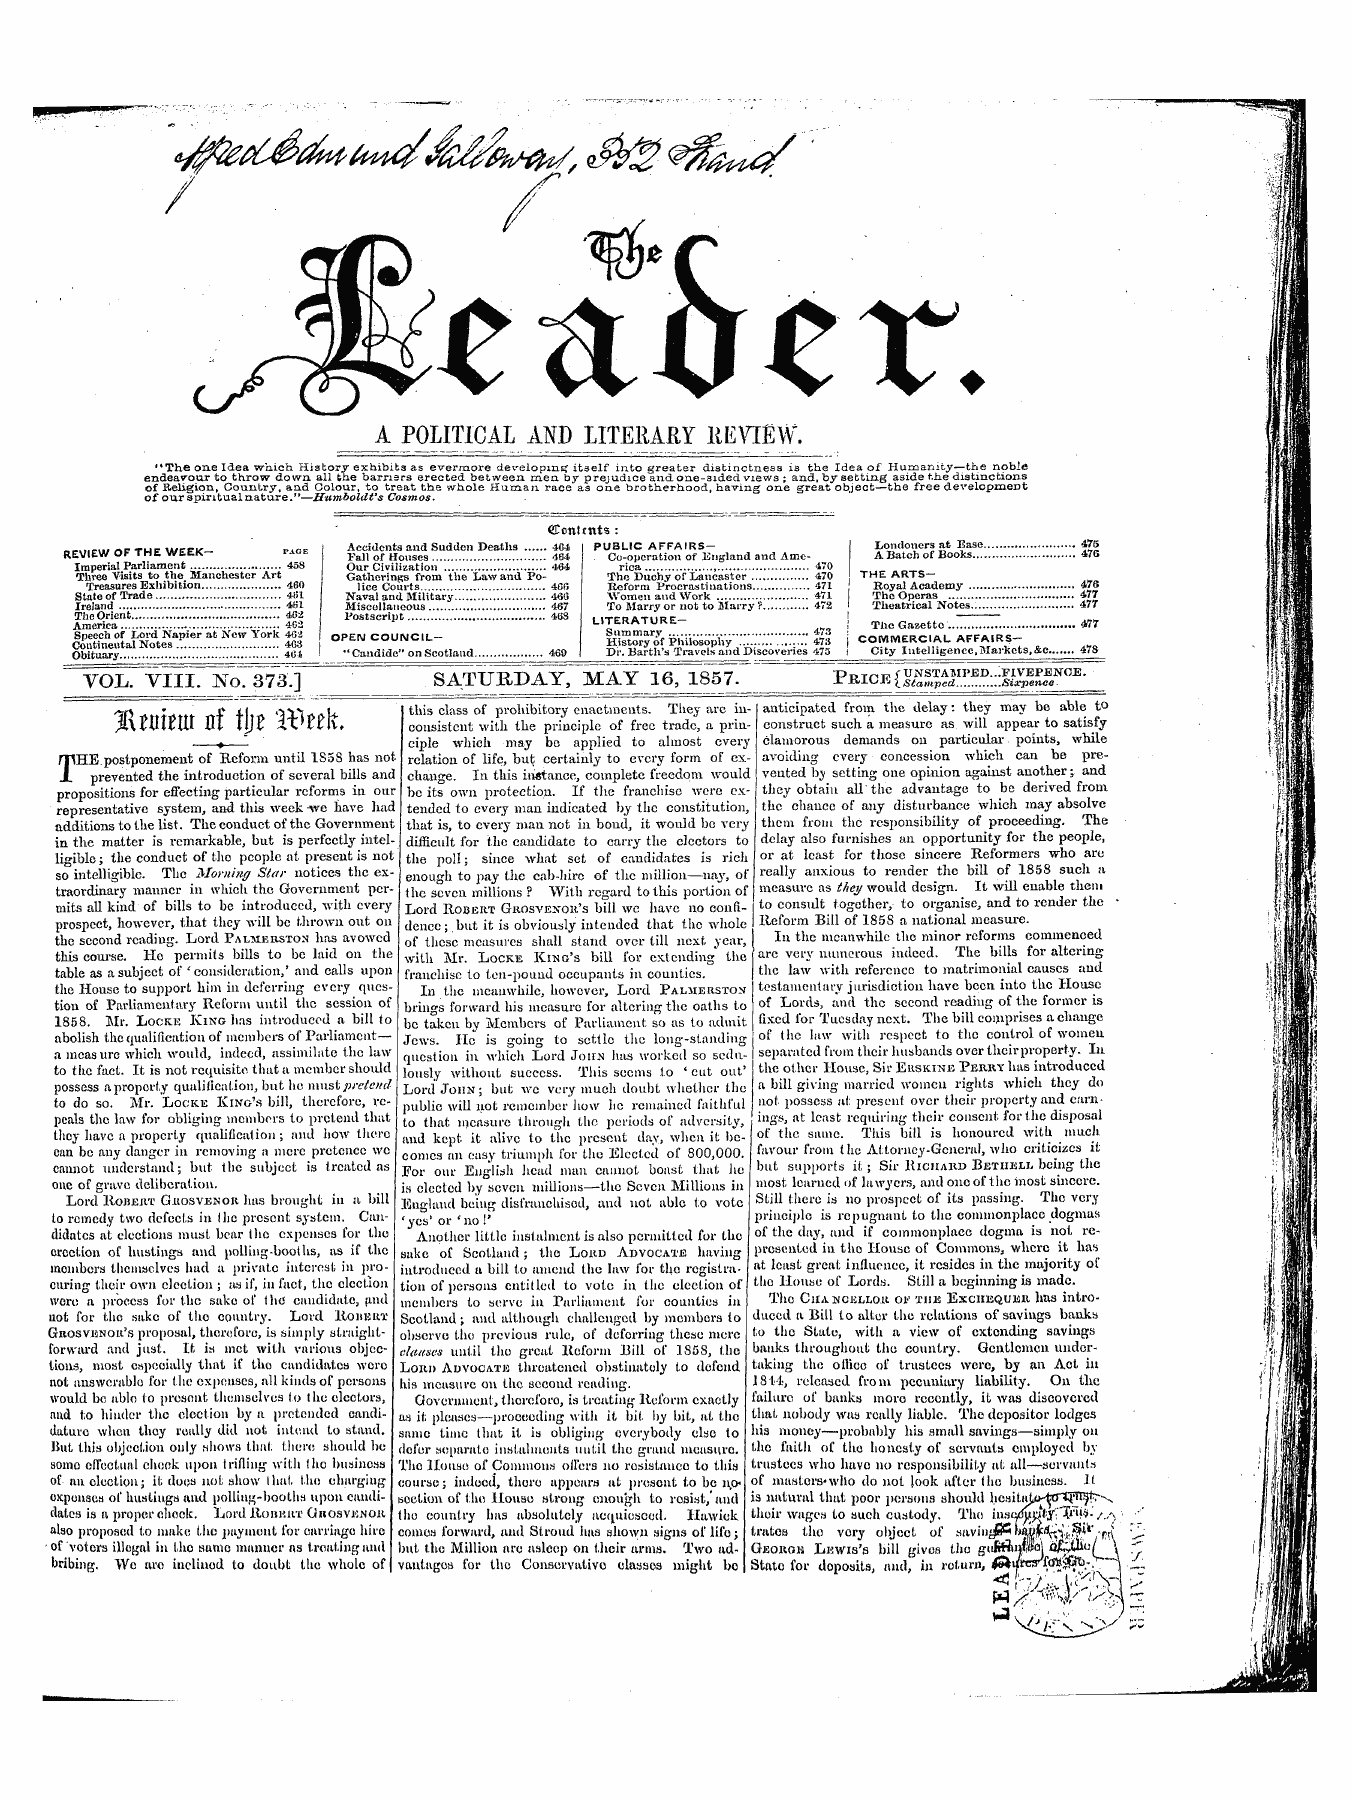 Leader (1850-1860): jS F Y, 1st edition - Gjp ^*C ^^ / ^^^^^ Vv ~V* ^ -V ? A Political And Literary Review*.